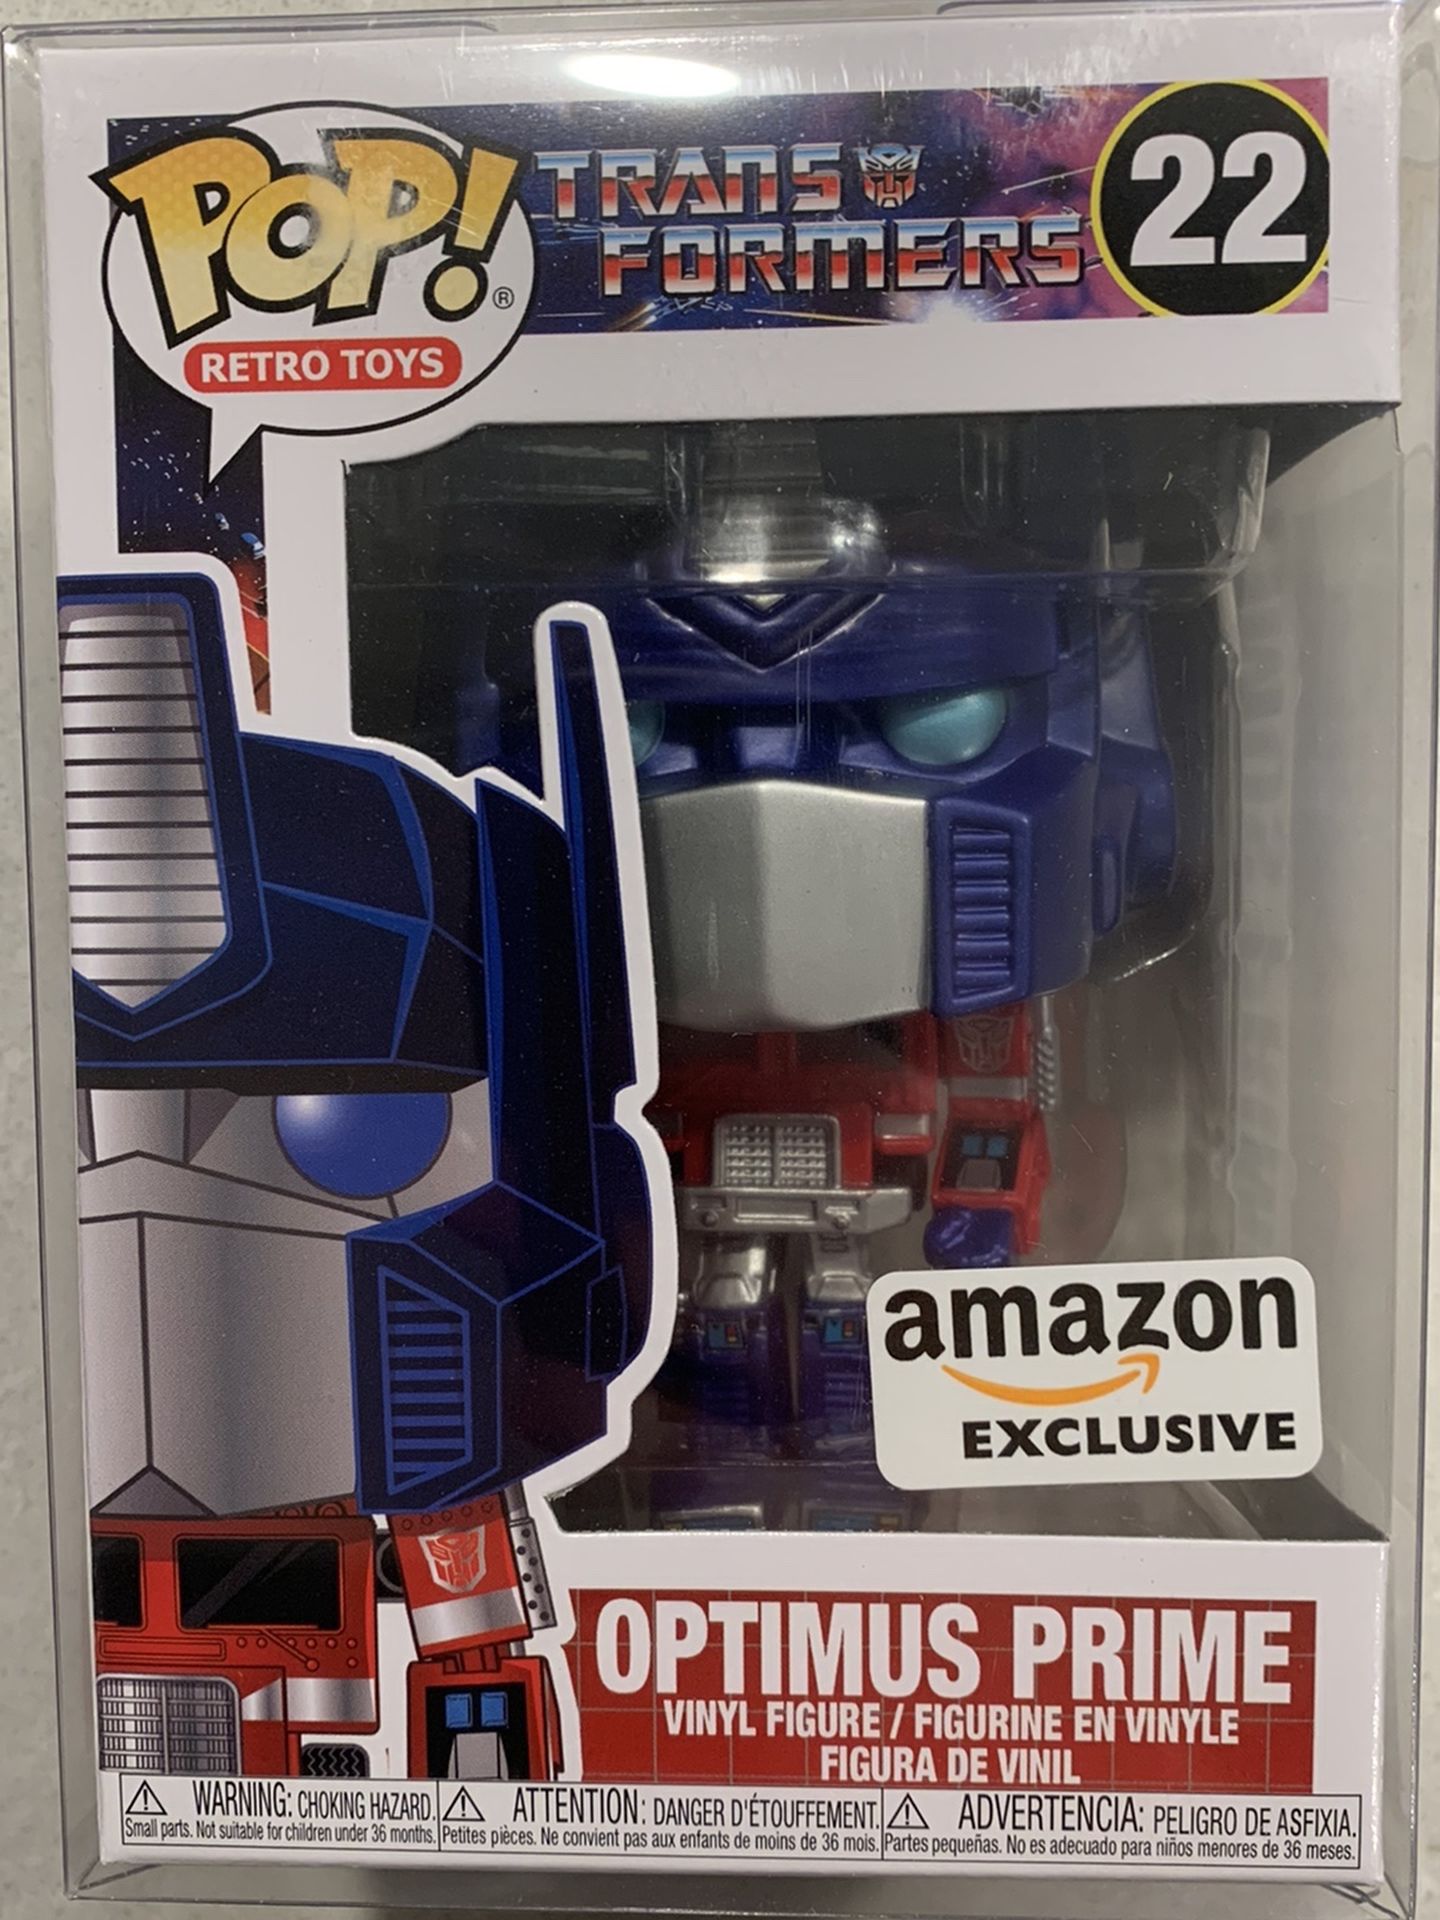 Optimus Prime Metallic Funko Pop *MINT* Amazon Exclusive Retro Toys Transformers 22 with protector